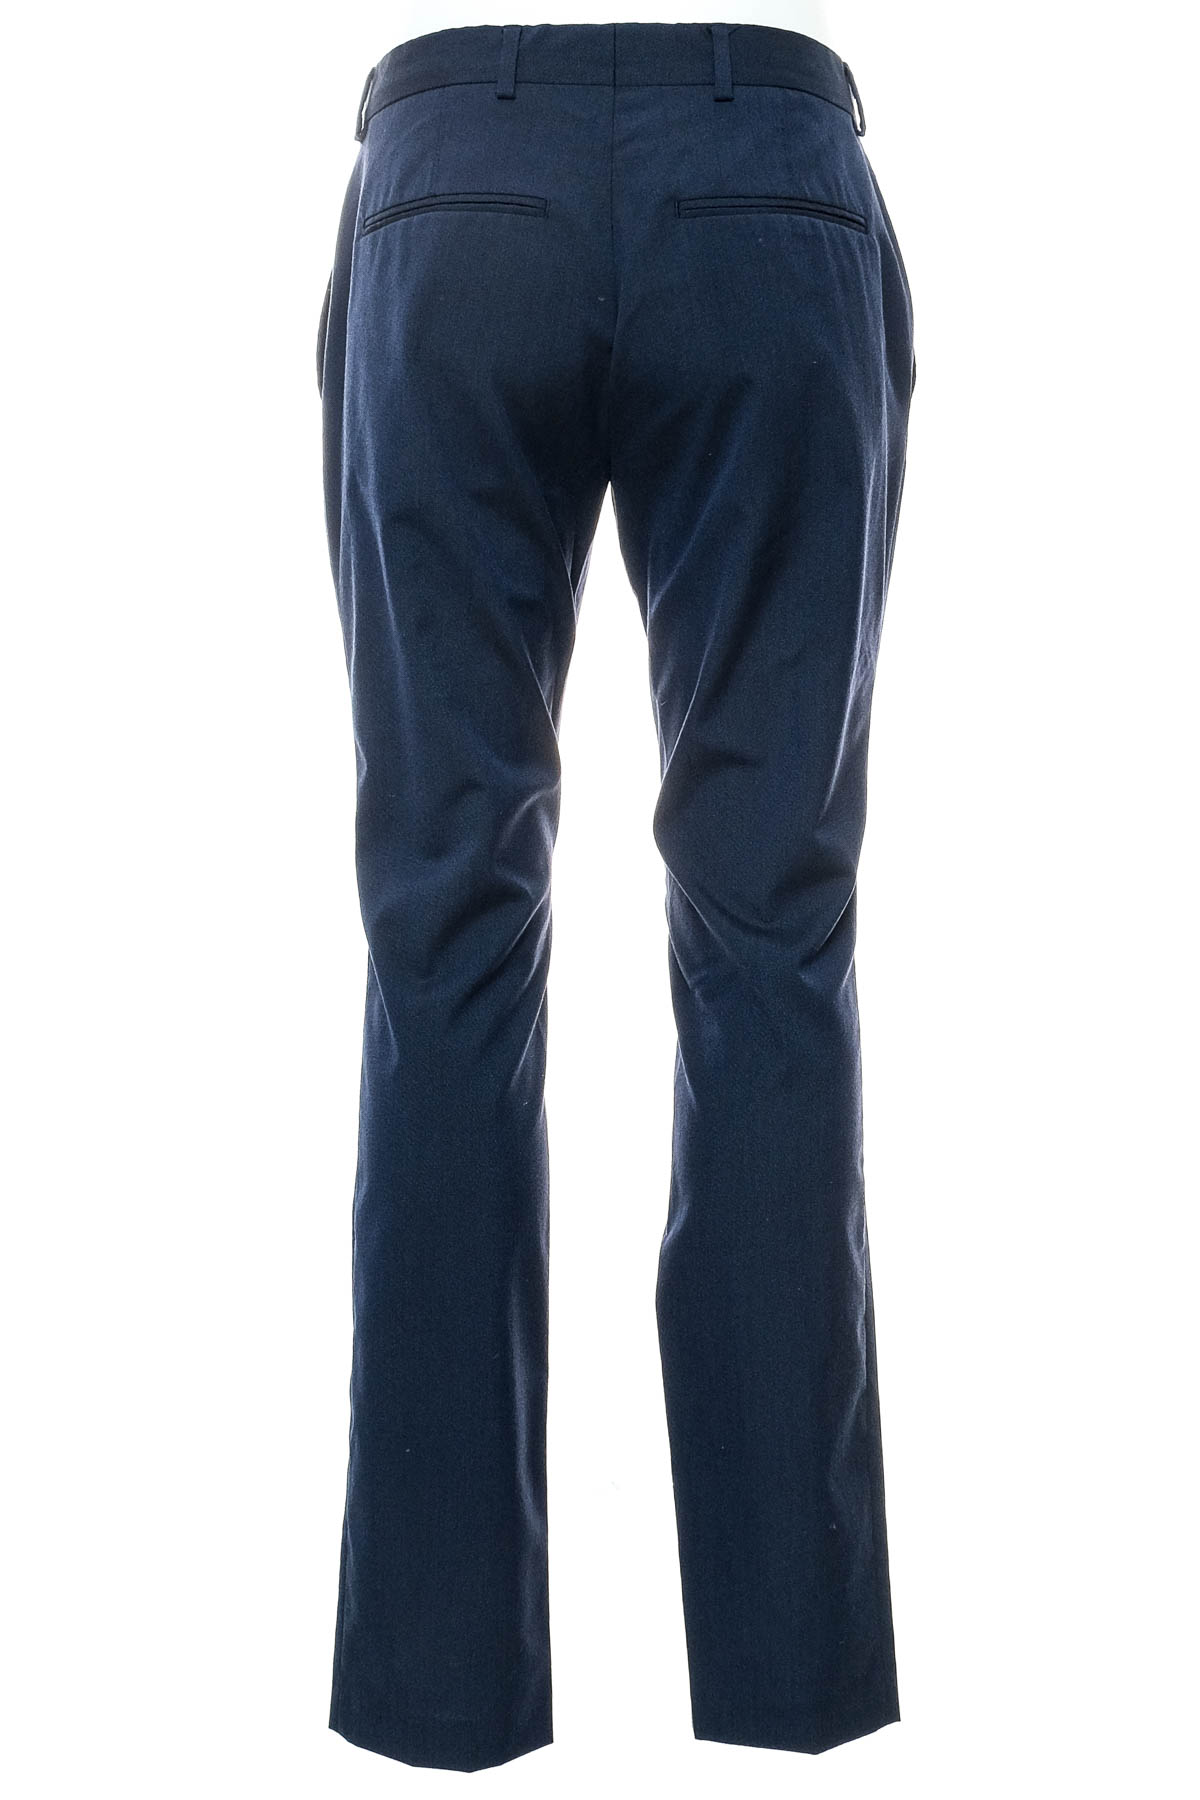 Men's trousers - RIVER ISLAND - 1